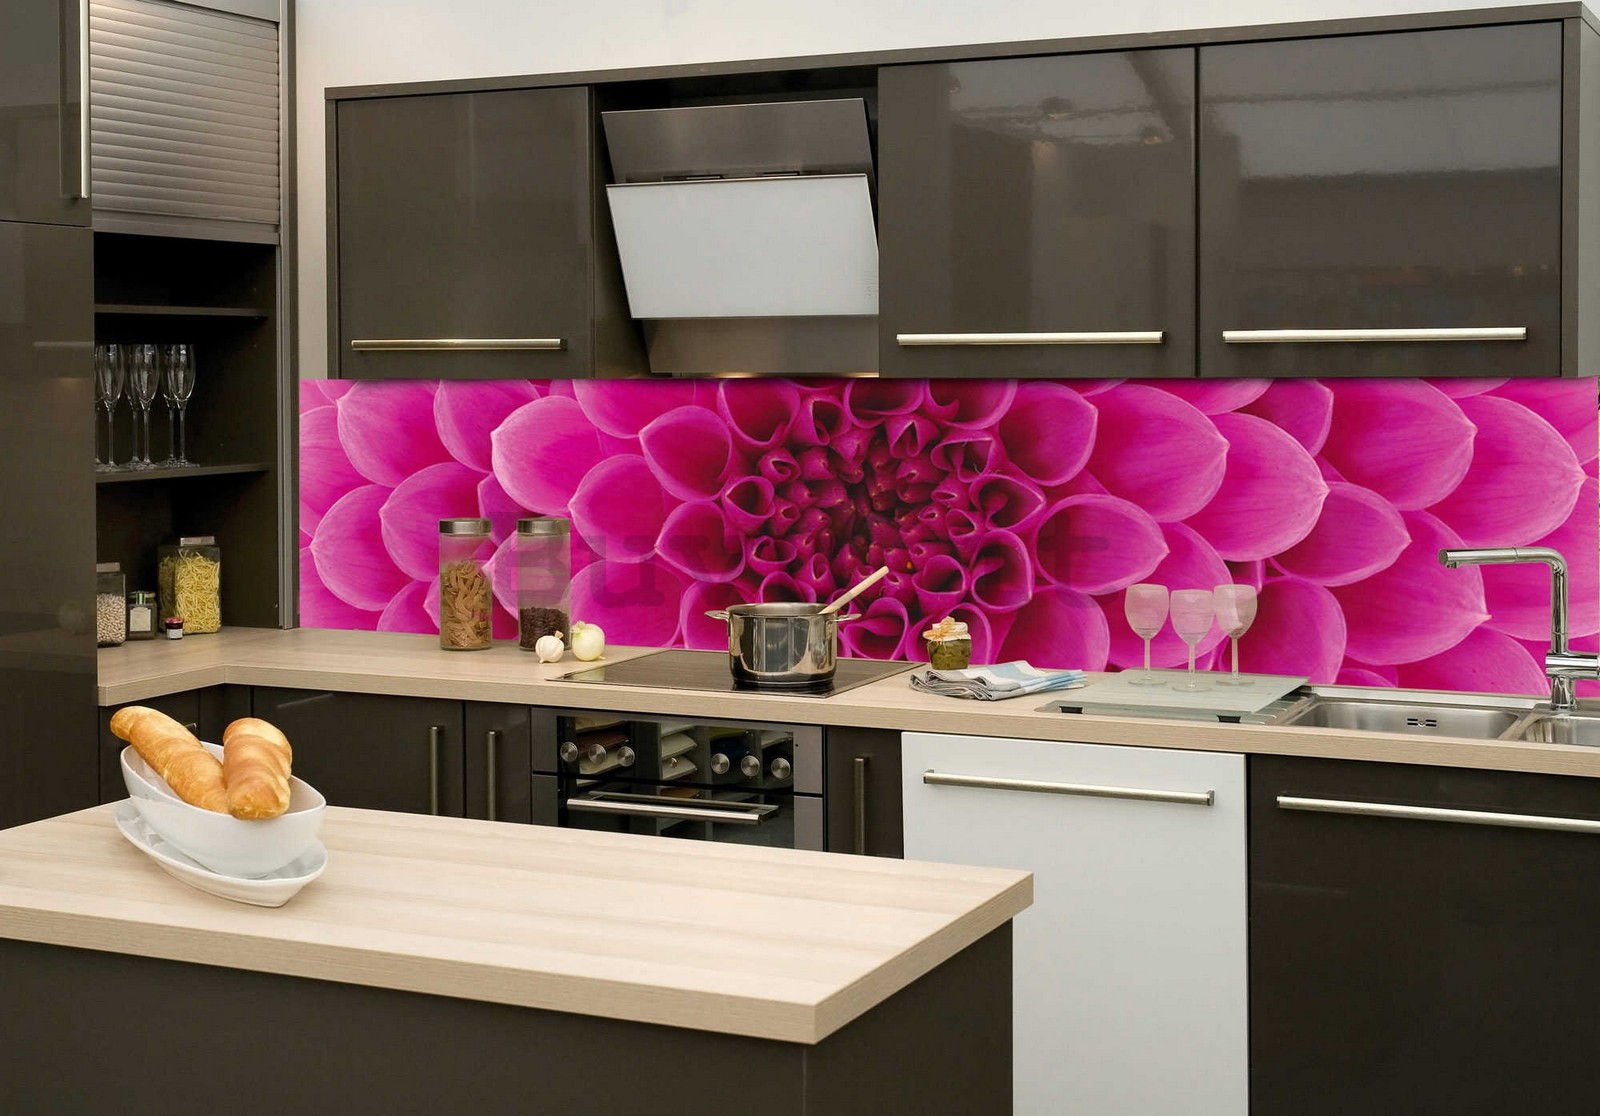 Fotomurale lavabile autoadesiva per cucina - Dalia rosa, 260x60 cm